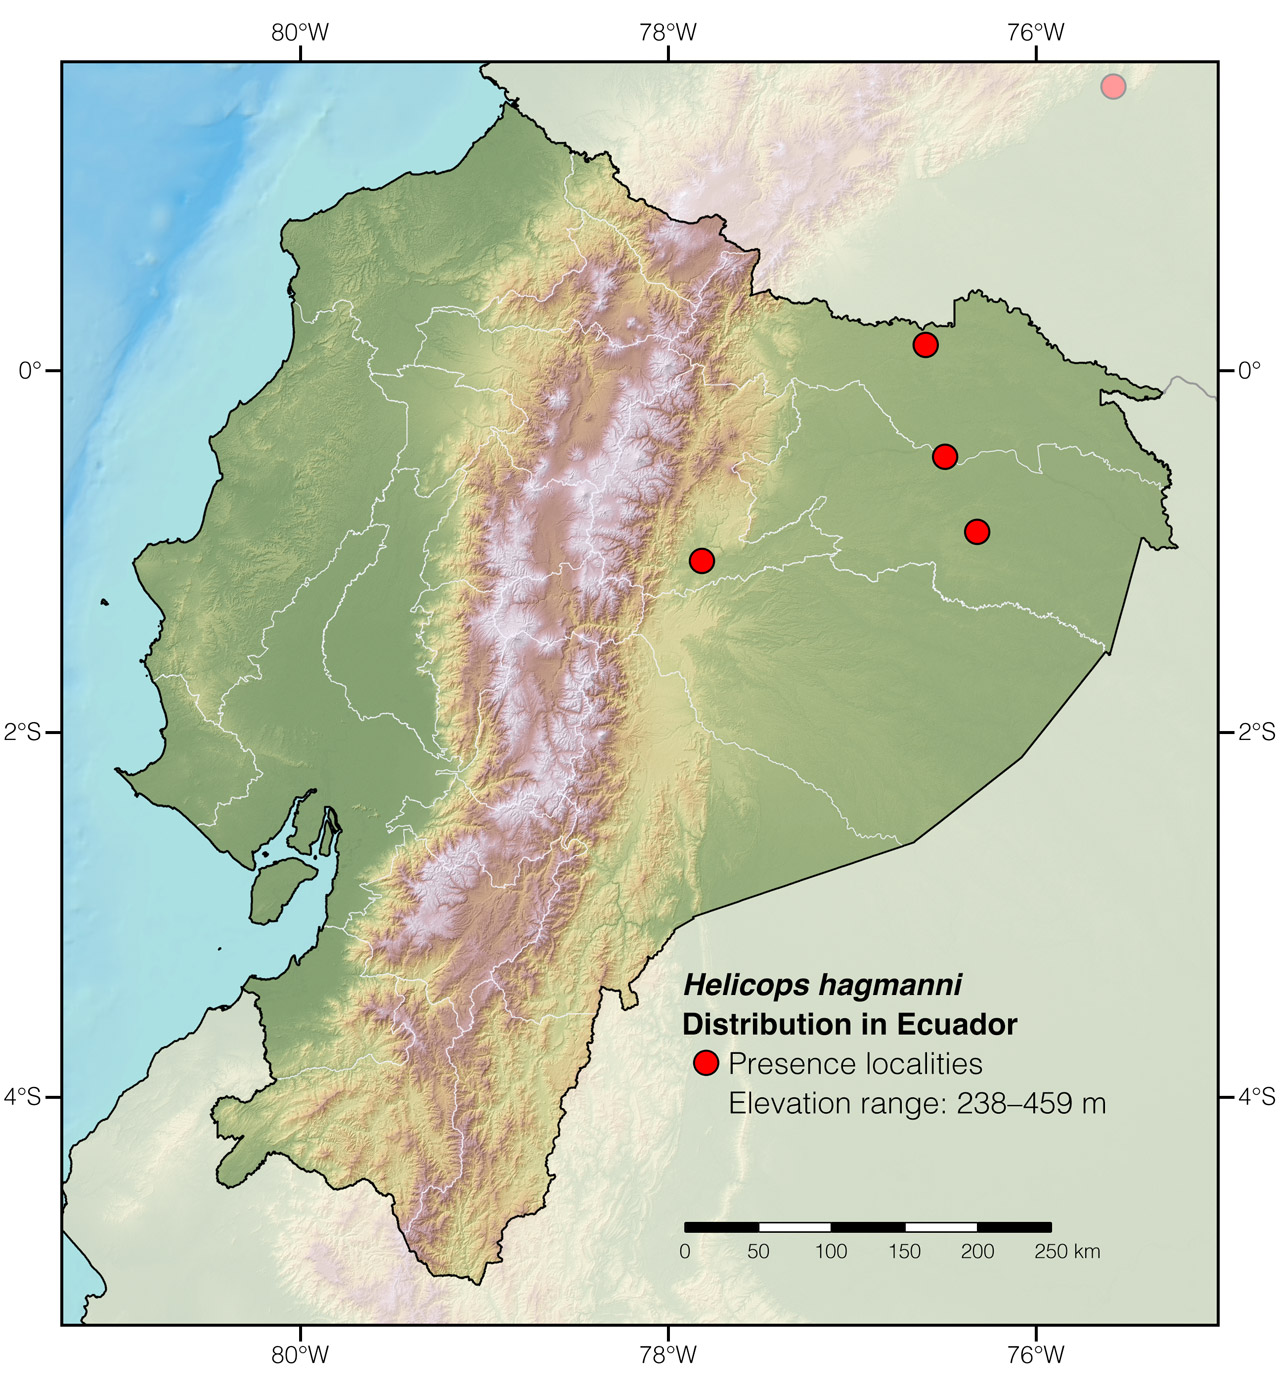 Distribution of Helicops hagmanni in Ecuador